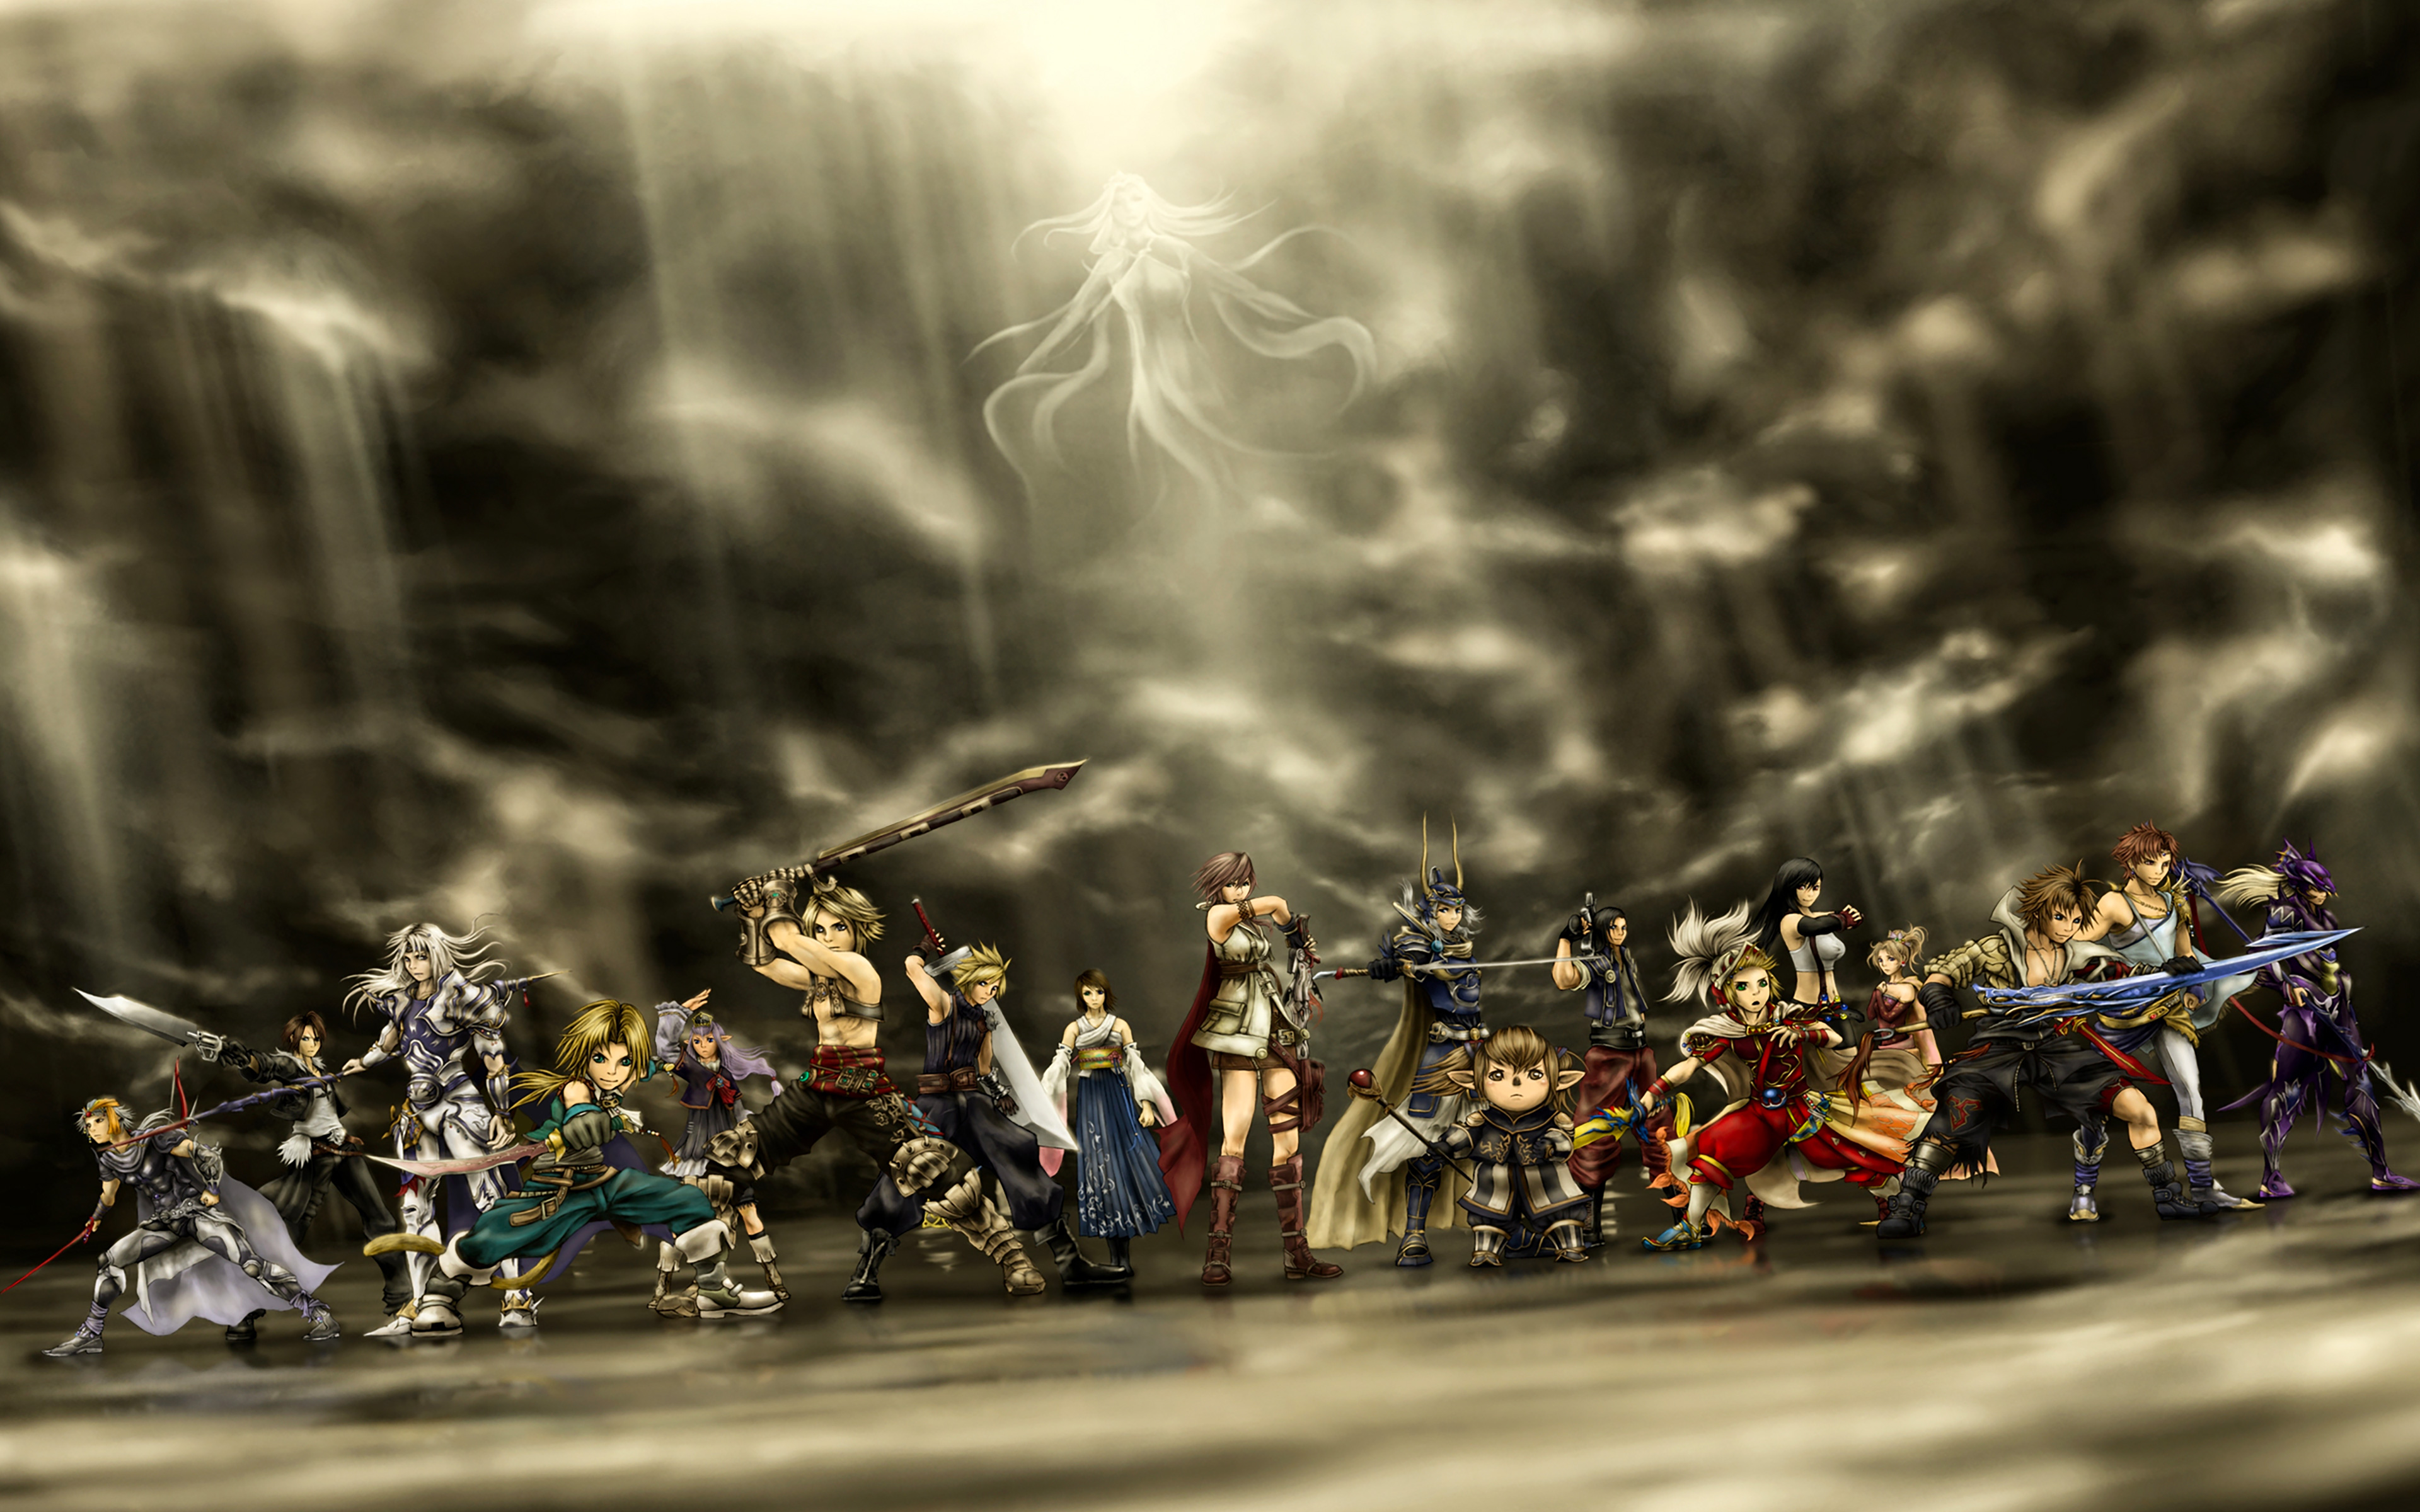 Dissidia Final Fantasy Nt Wallpaper In Ultra HD 4k Gameranx